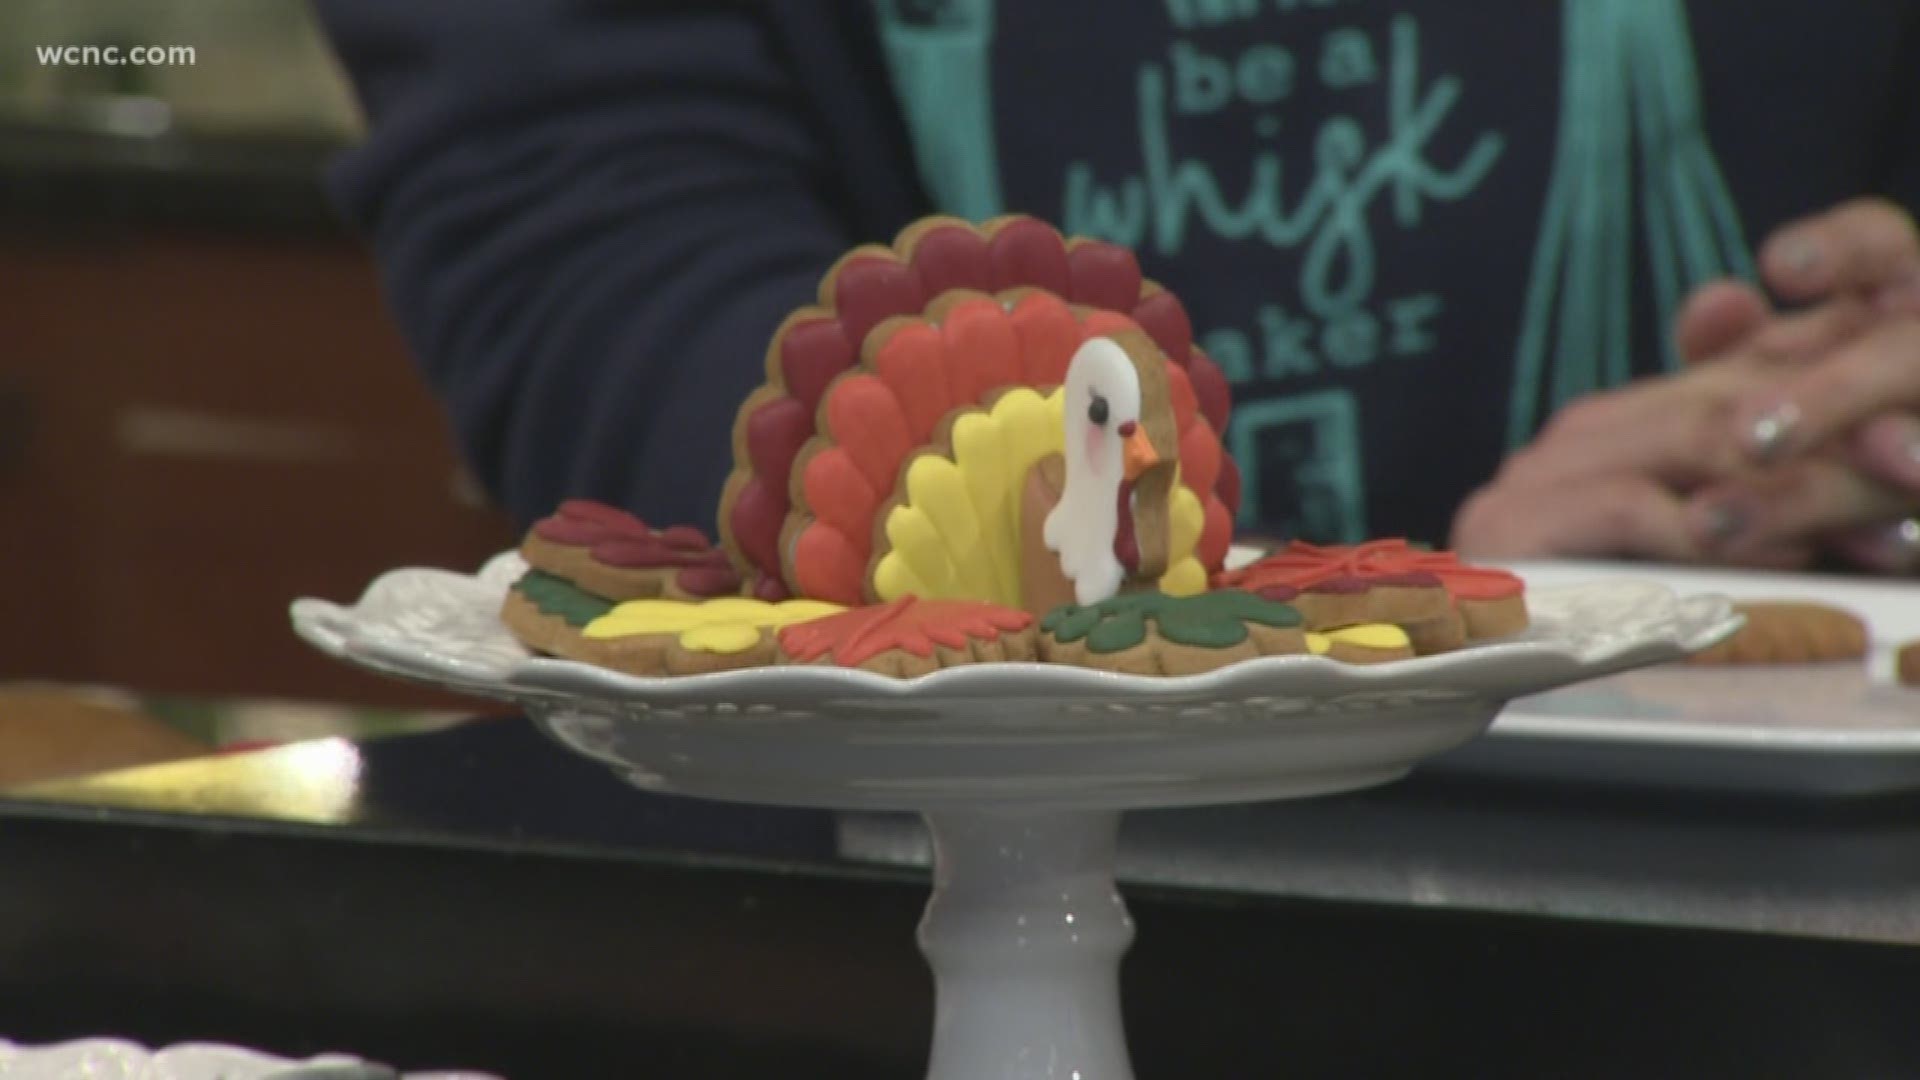 Owner of Sweet Spot Studio, Jossie Lukacik, shows us how to make an adorable 3D turkey cookie display.